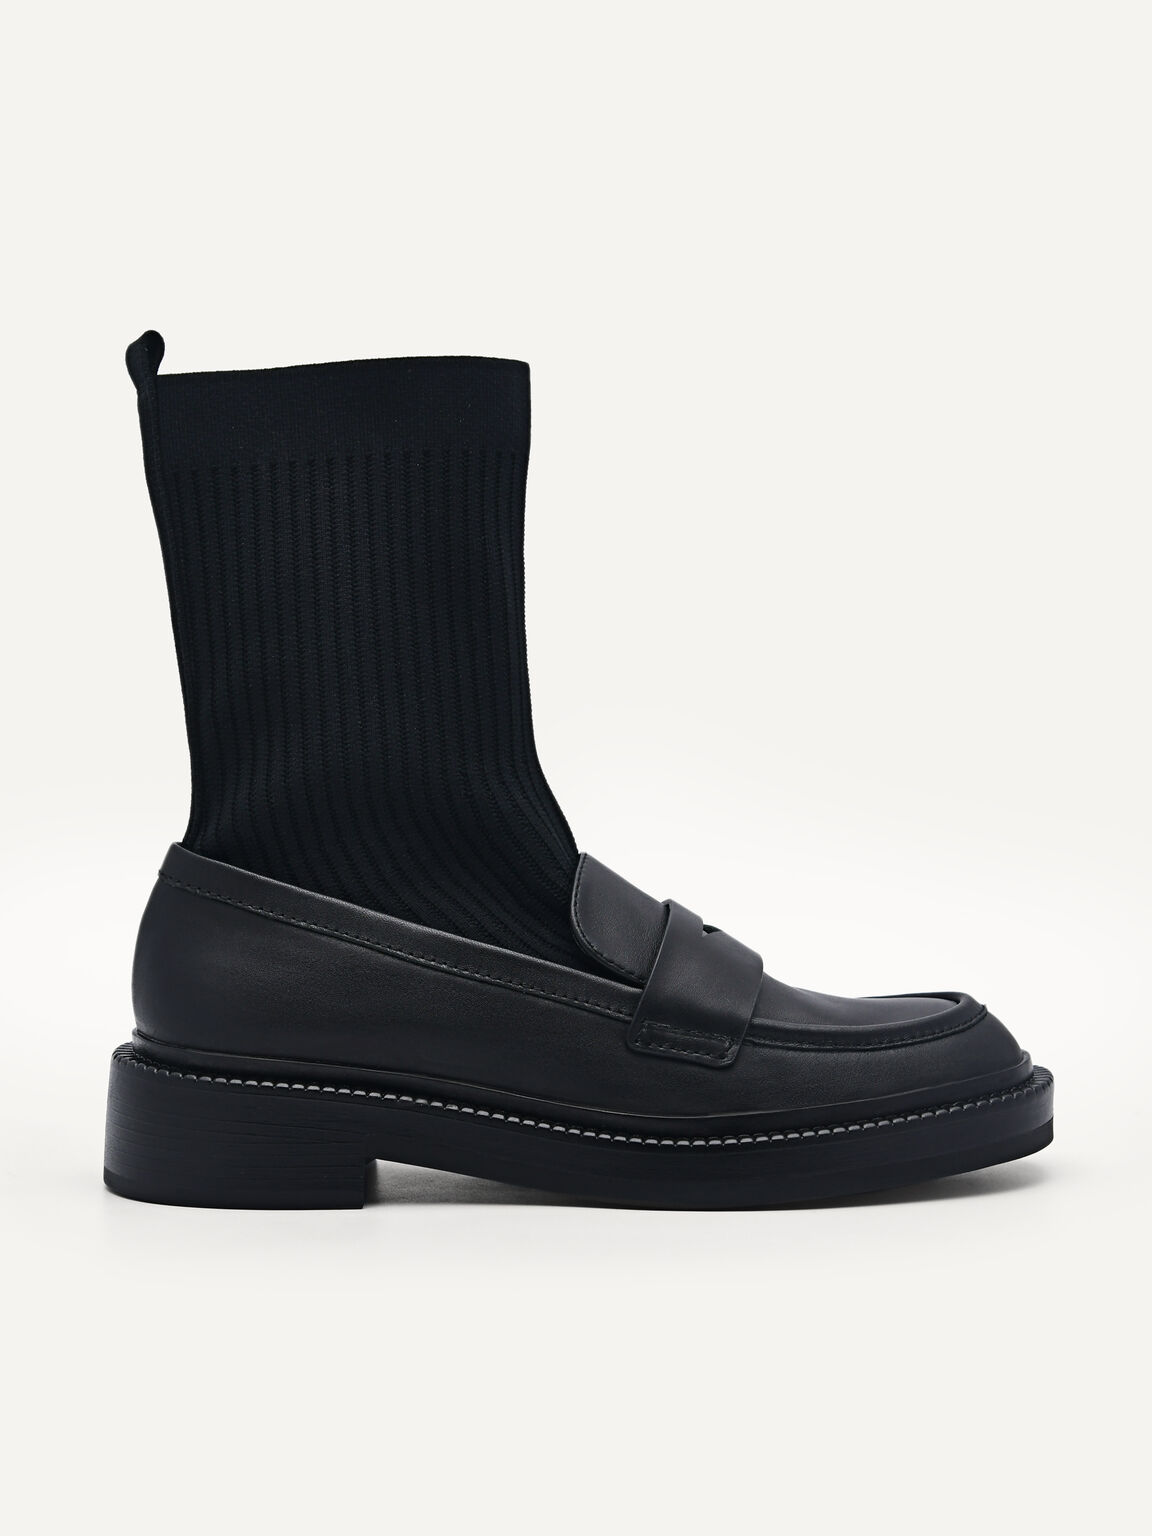 Leather Gropius Boots, Black